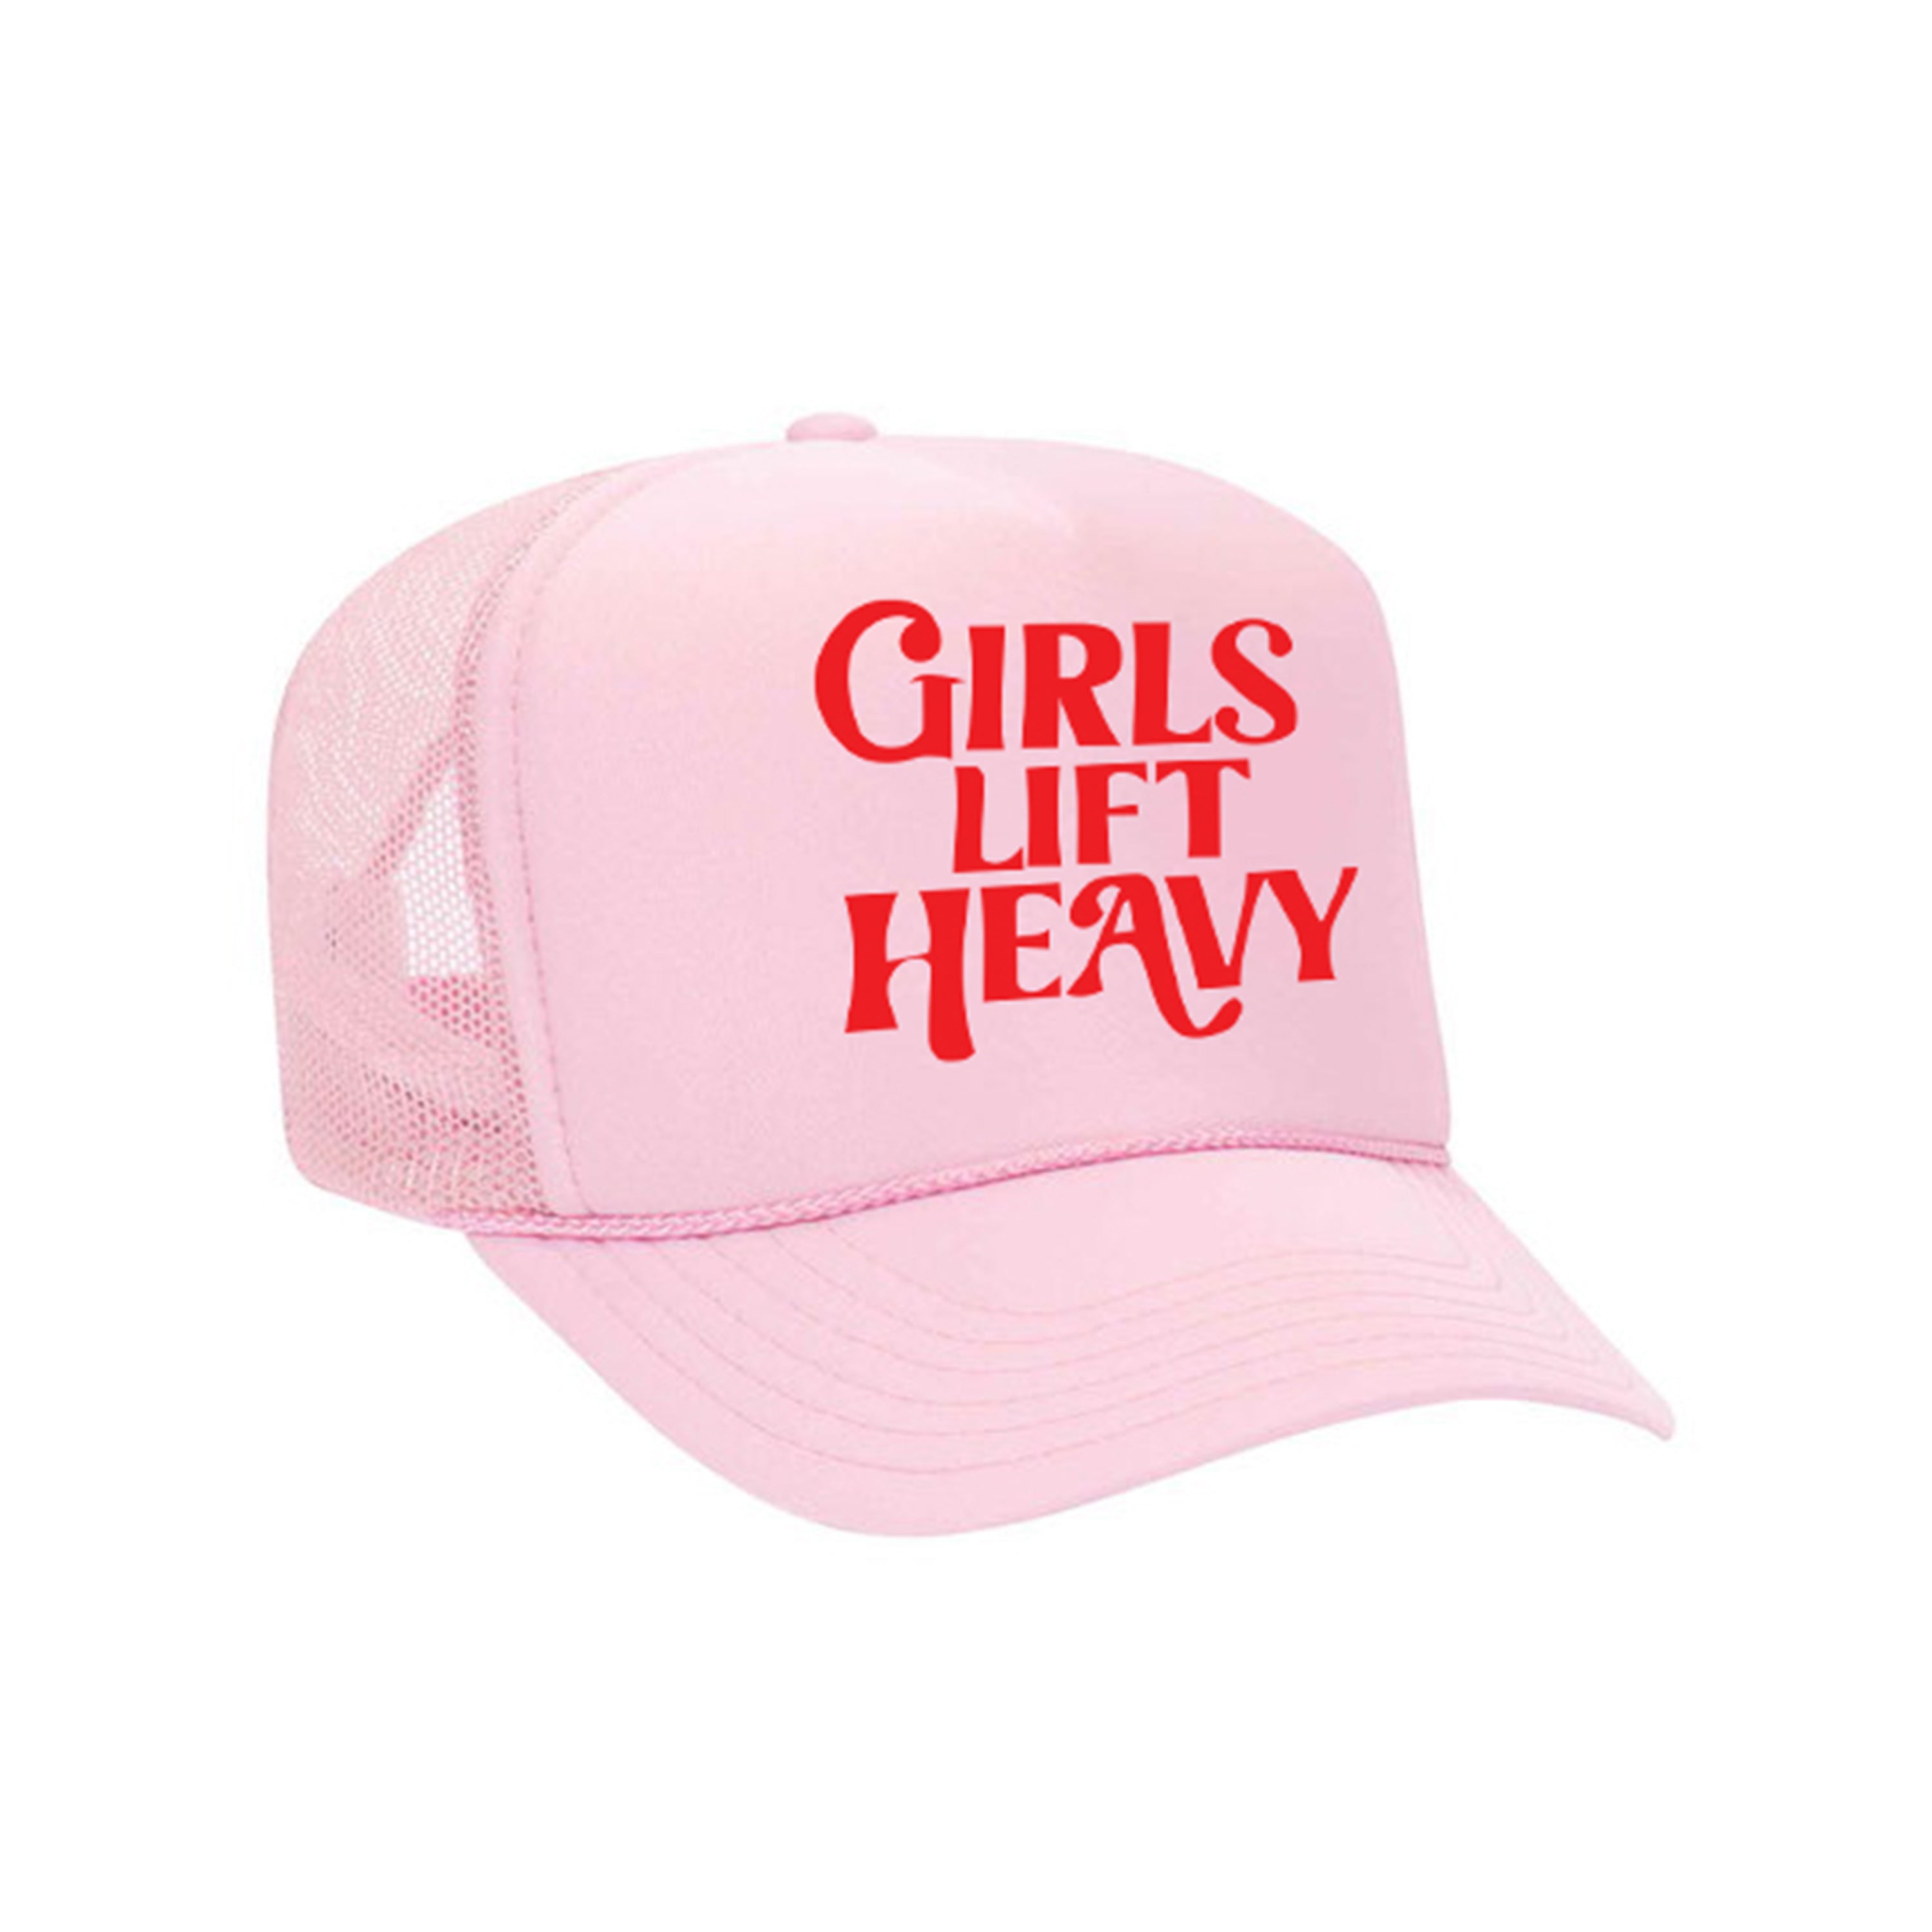 GIRLS LIFT HEAVY SNAPBACK - TRUCKER HATS